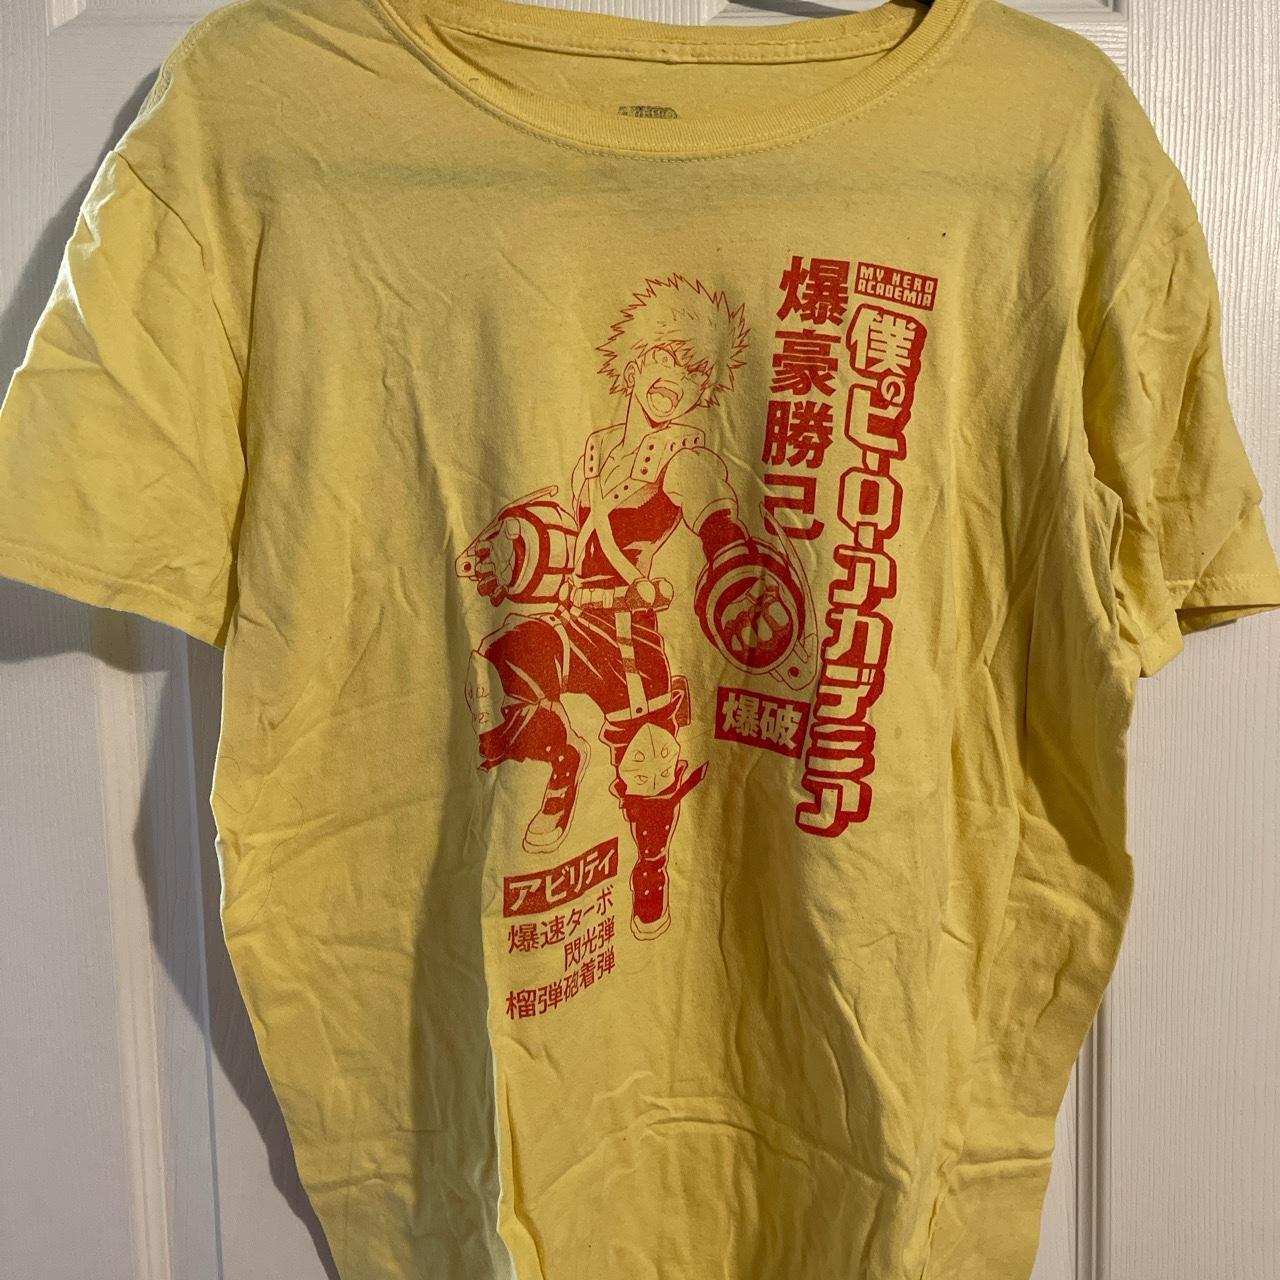 Bakugo mha shirt #bakugo #mha - Depop